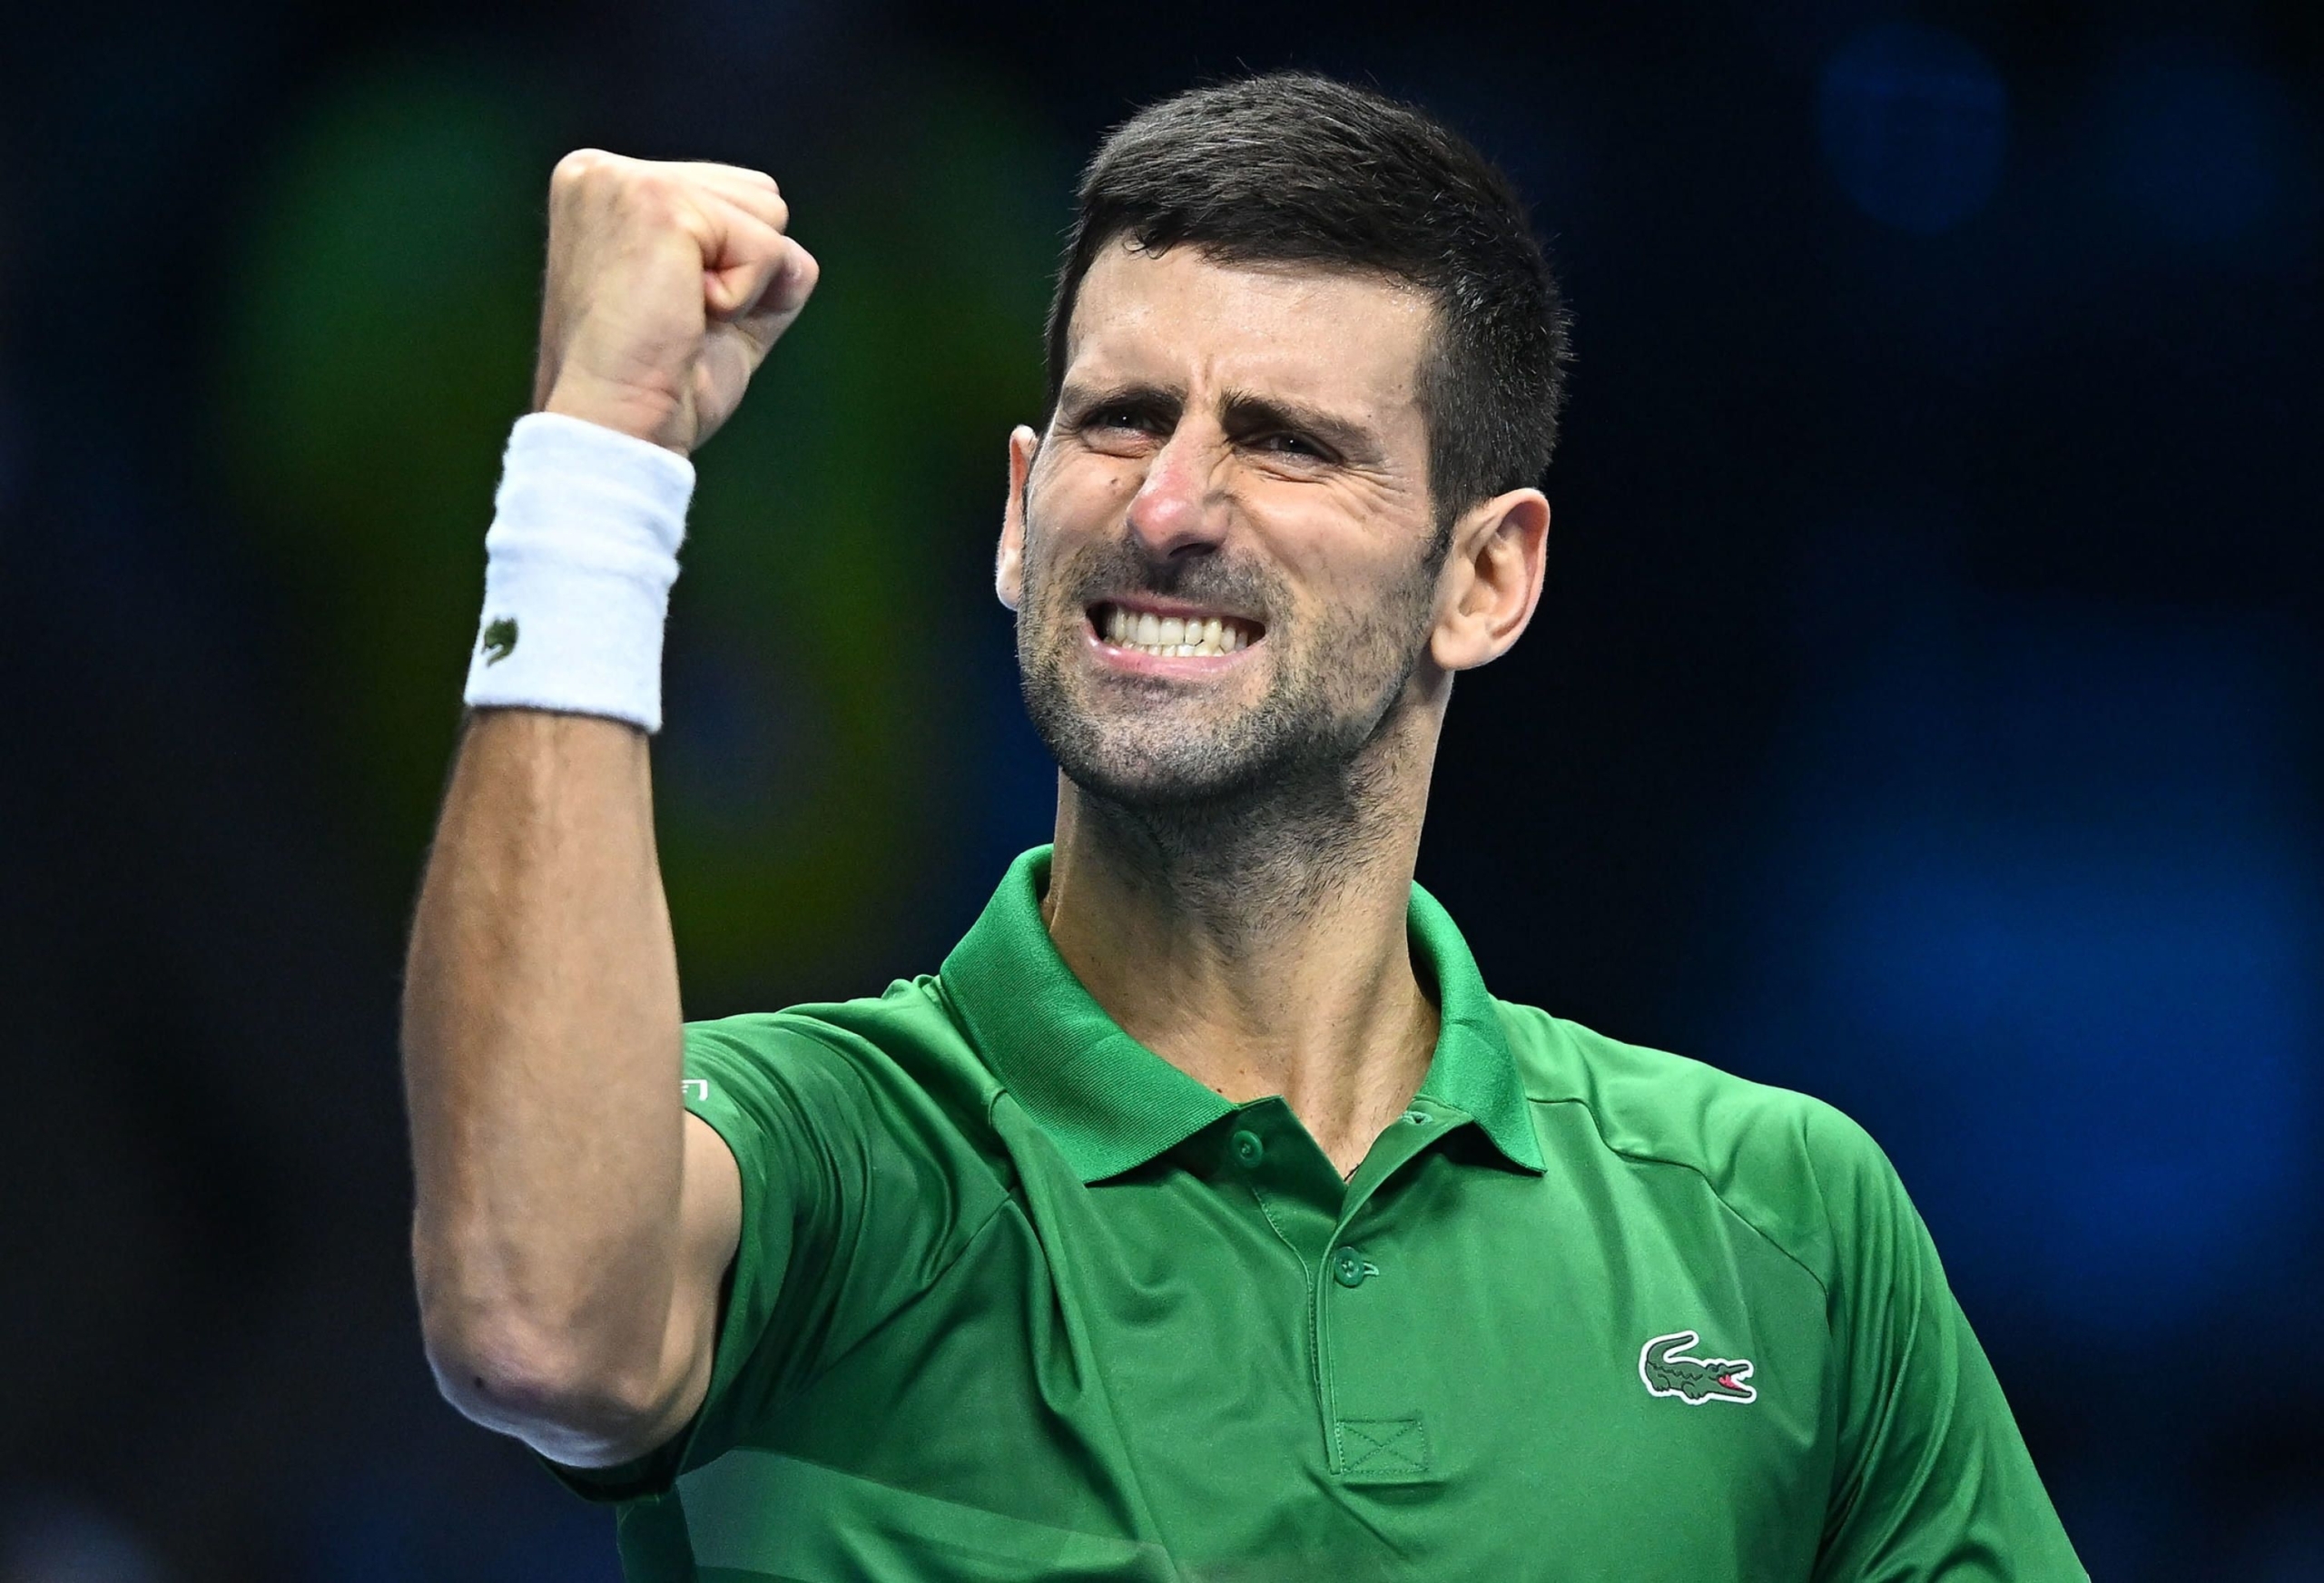 Ban lifted: Djokovic allowed to return to Australia